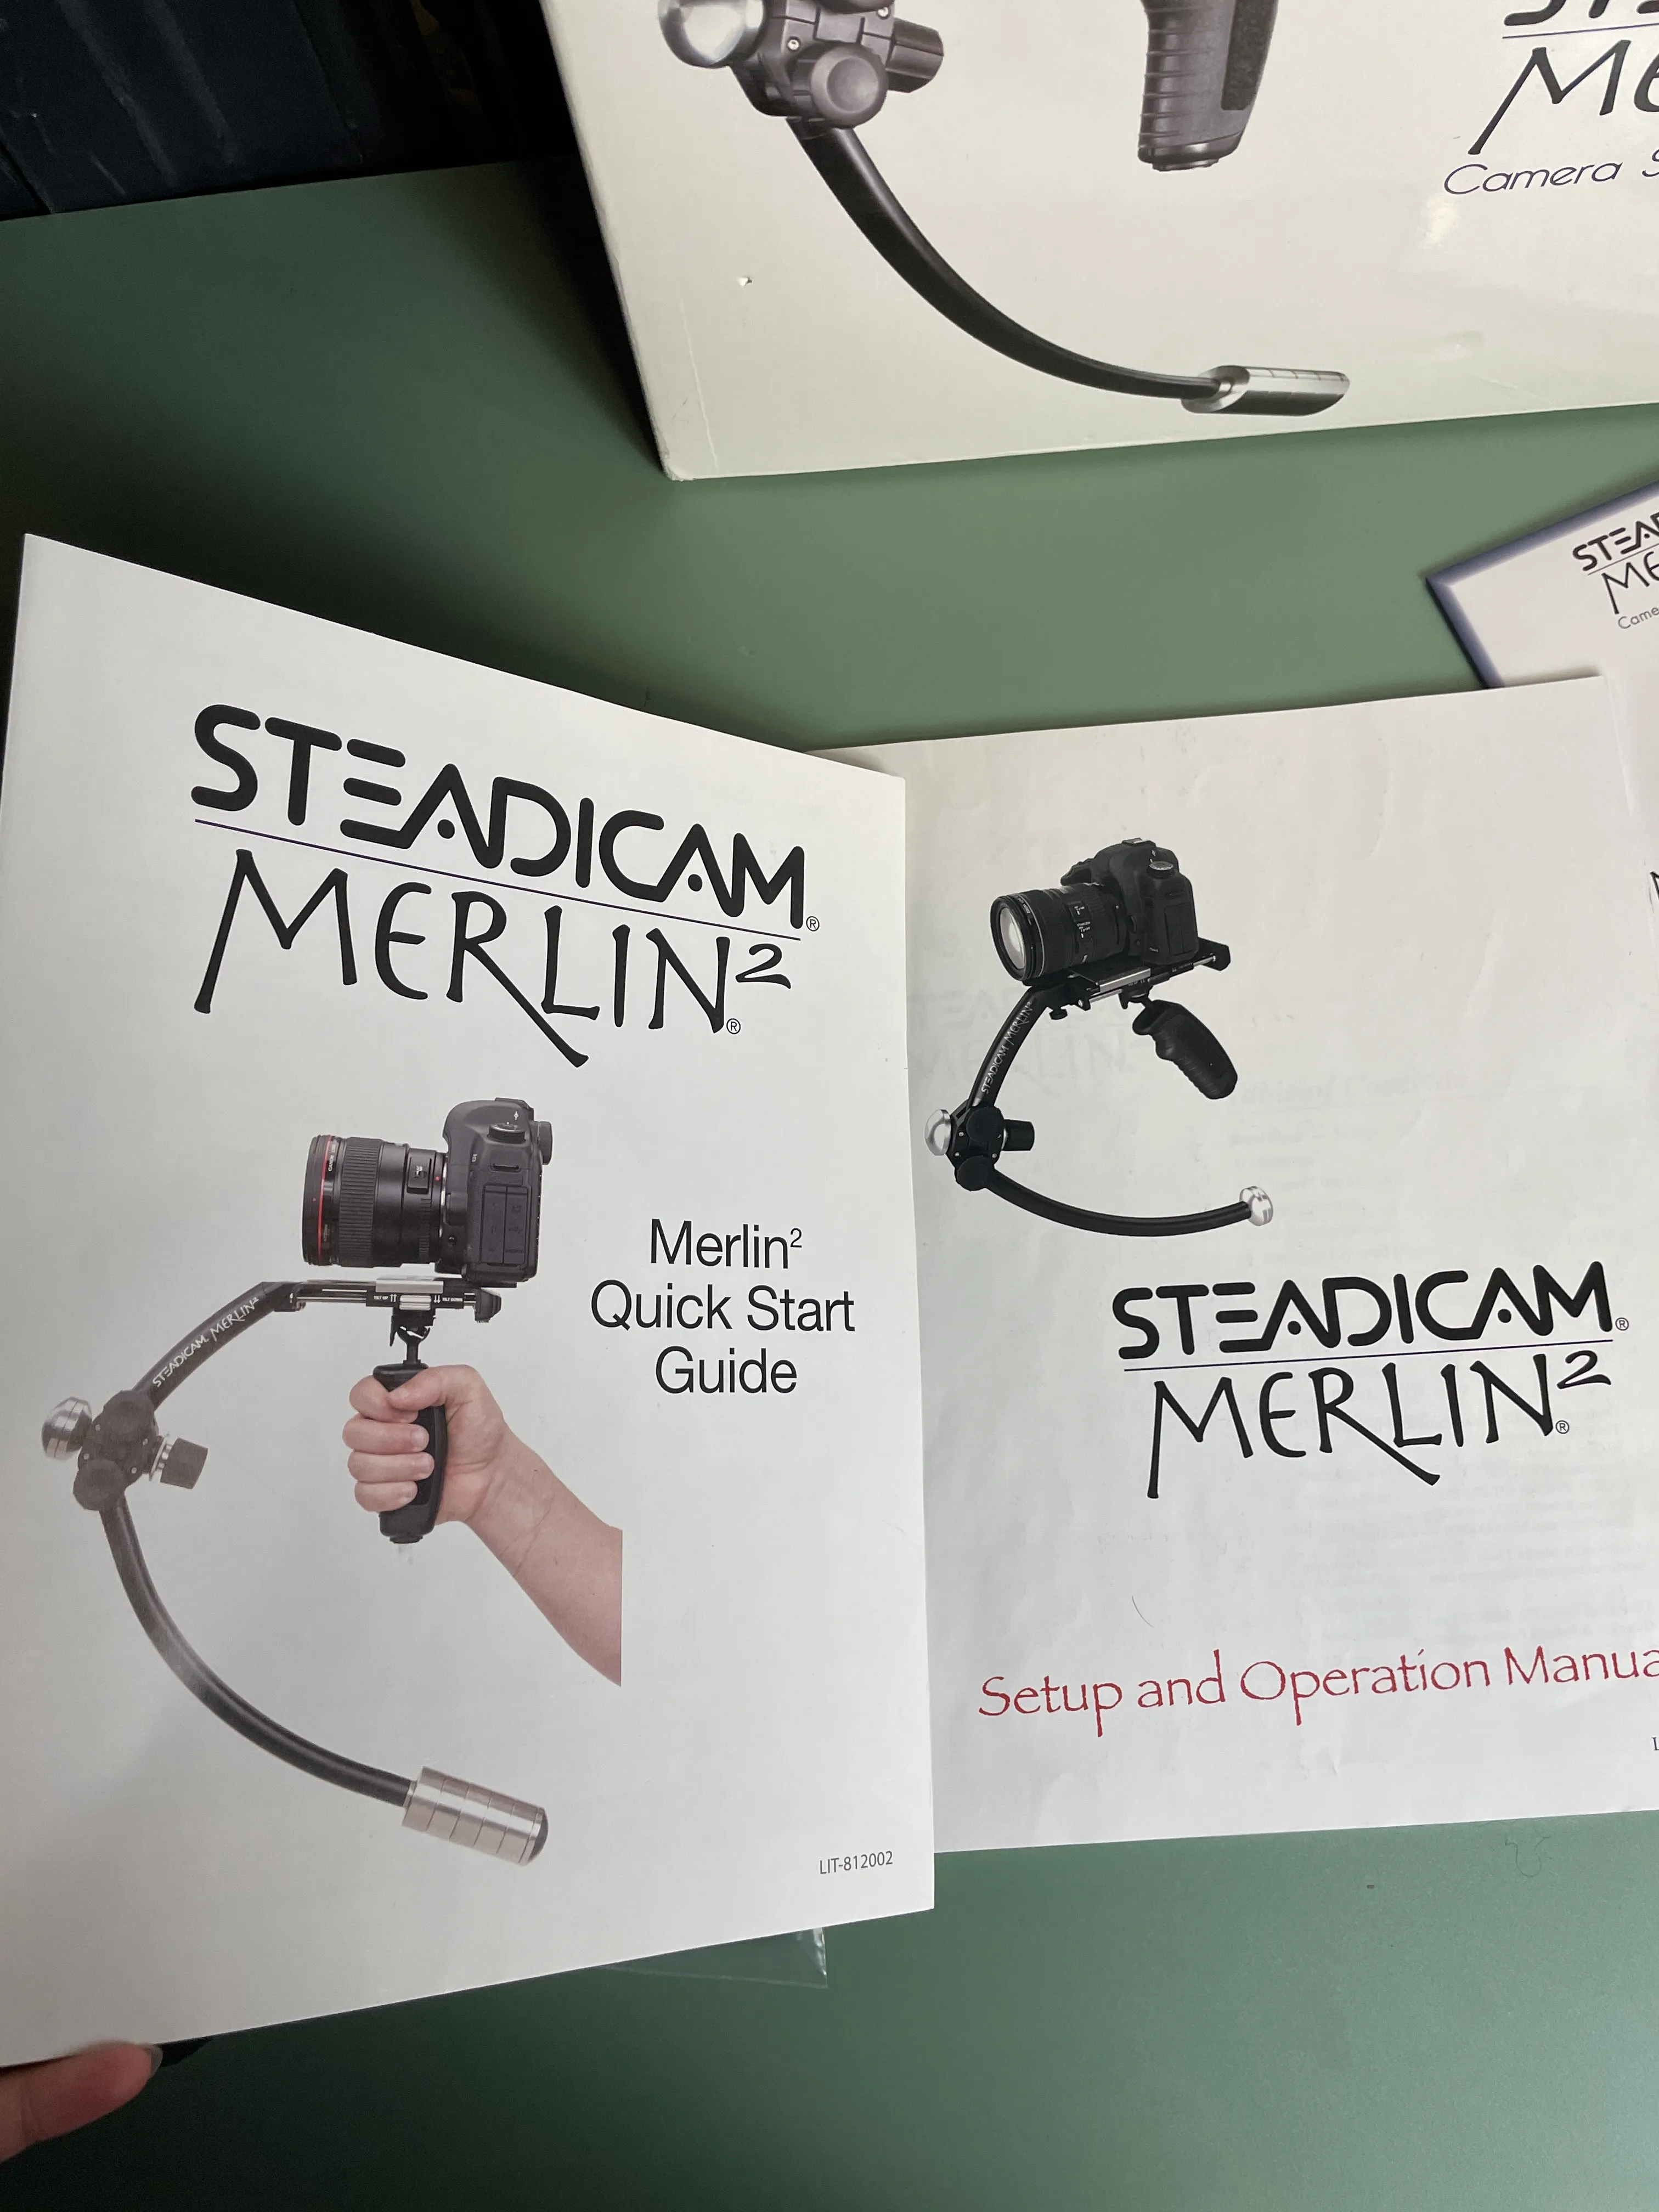 Steadicam Merlin 2 media